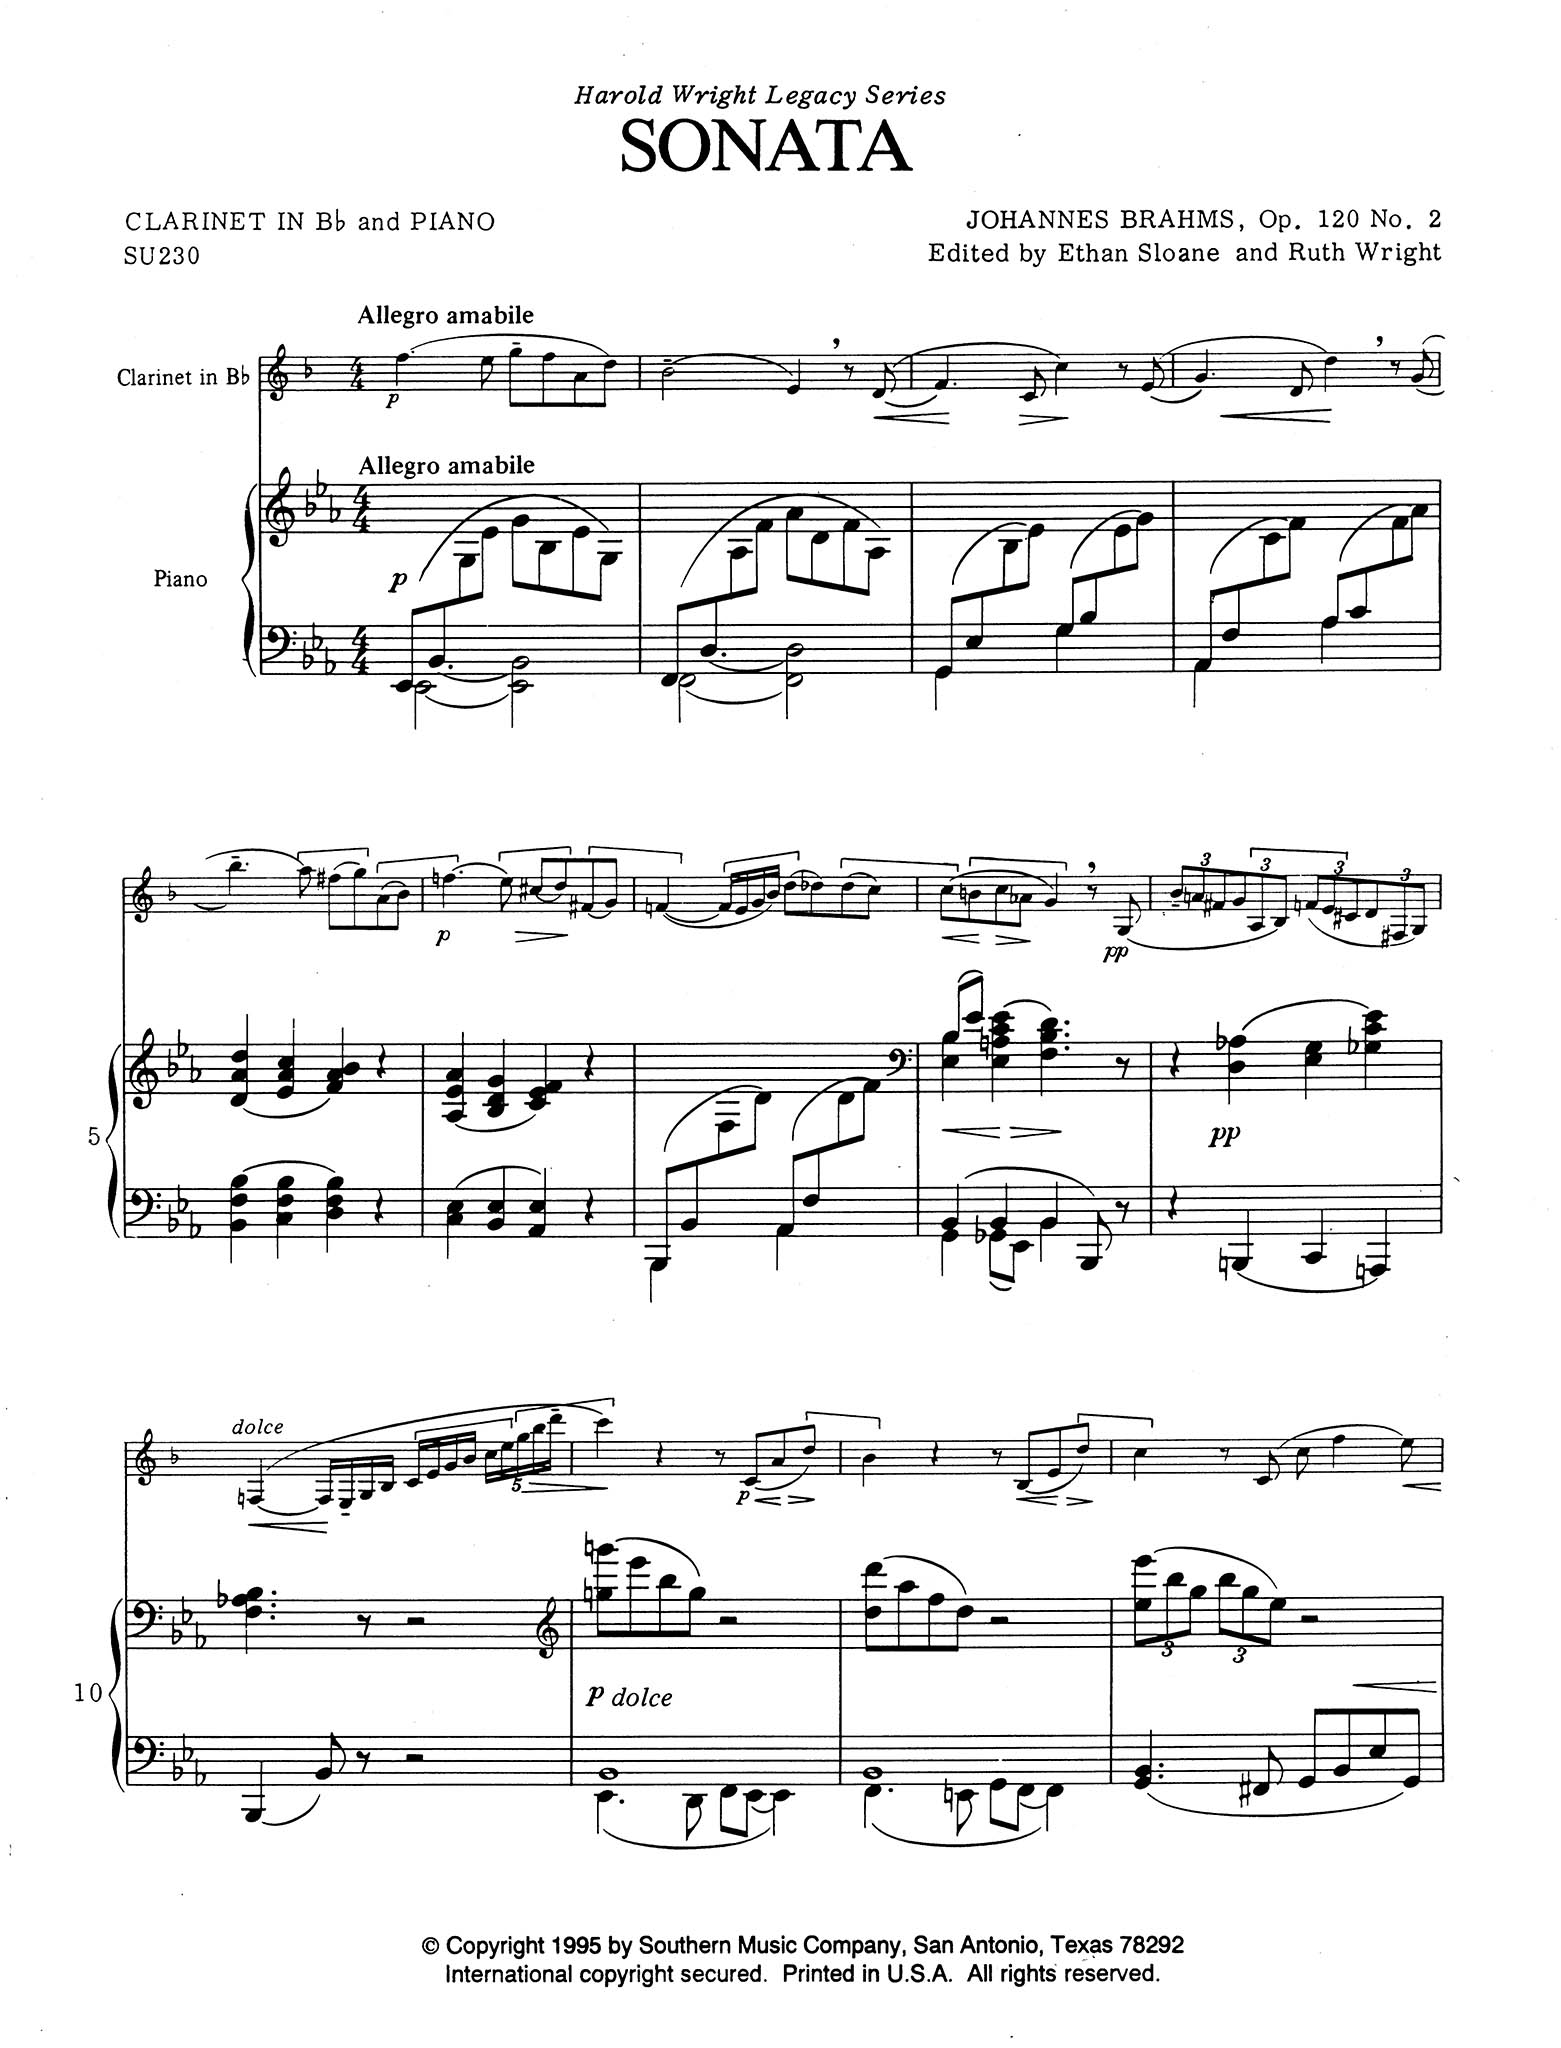 Sonata in E-flat Major, Op. 120 No. 2 - Movement 1